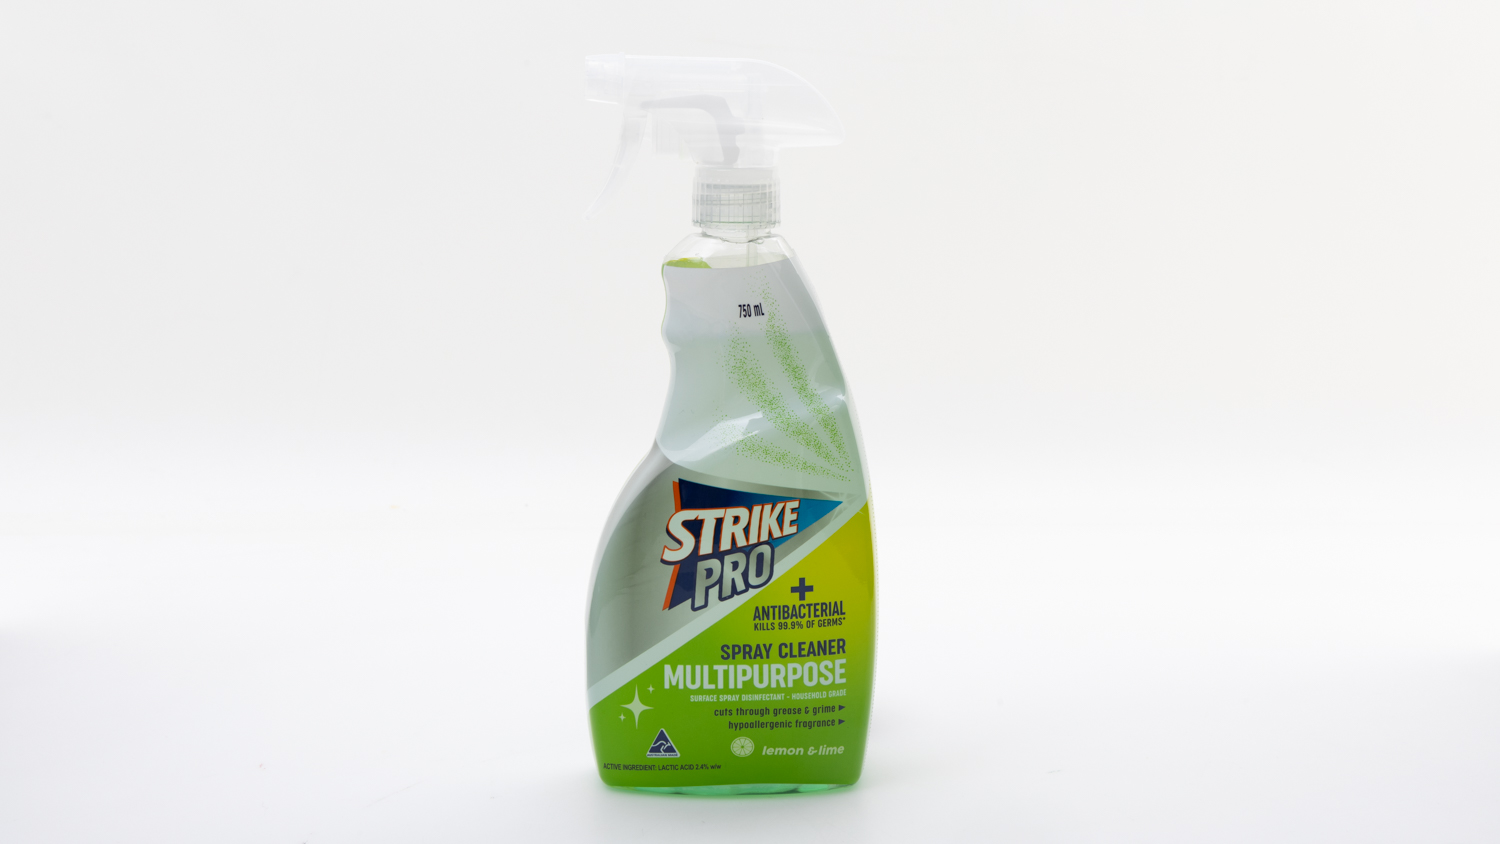 Woolworths Strike Pro Multipurpose Spray Cleaner carousel image